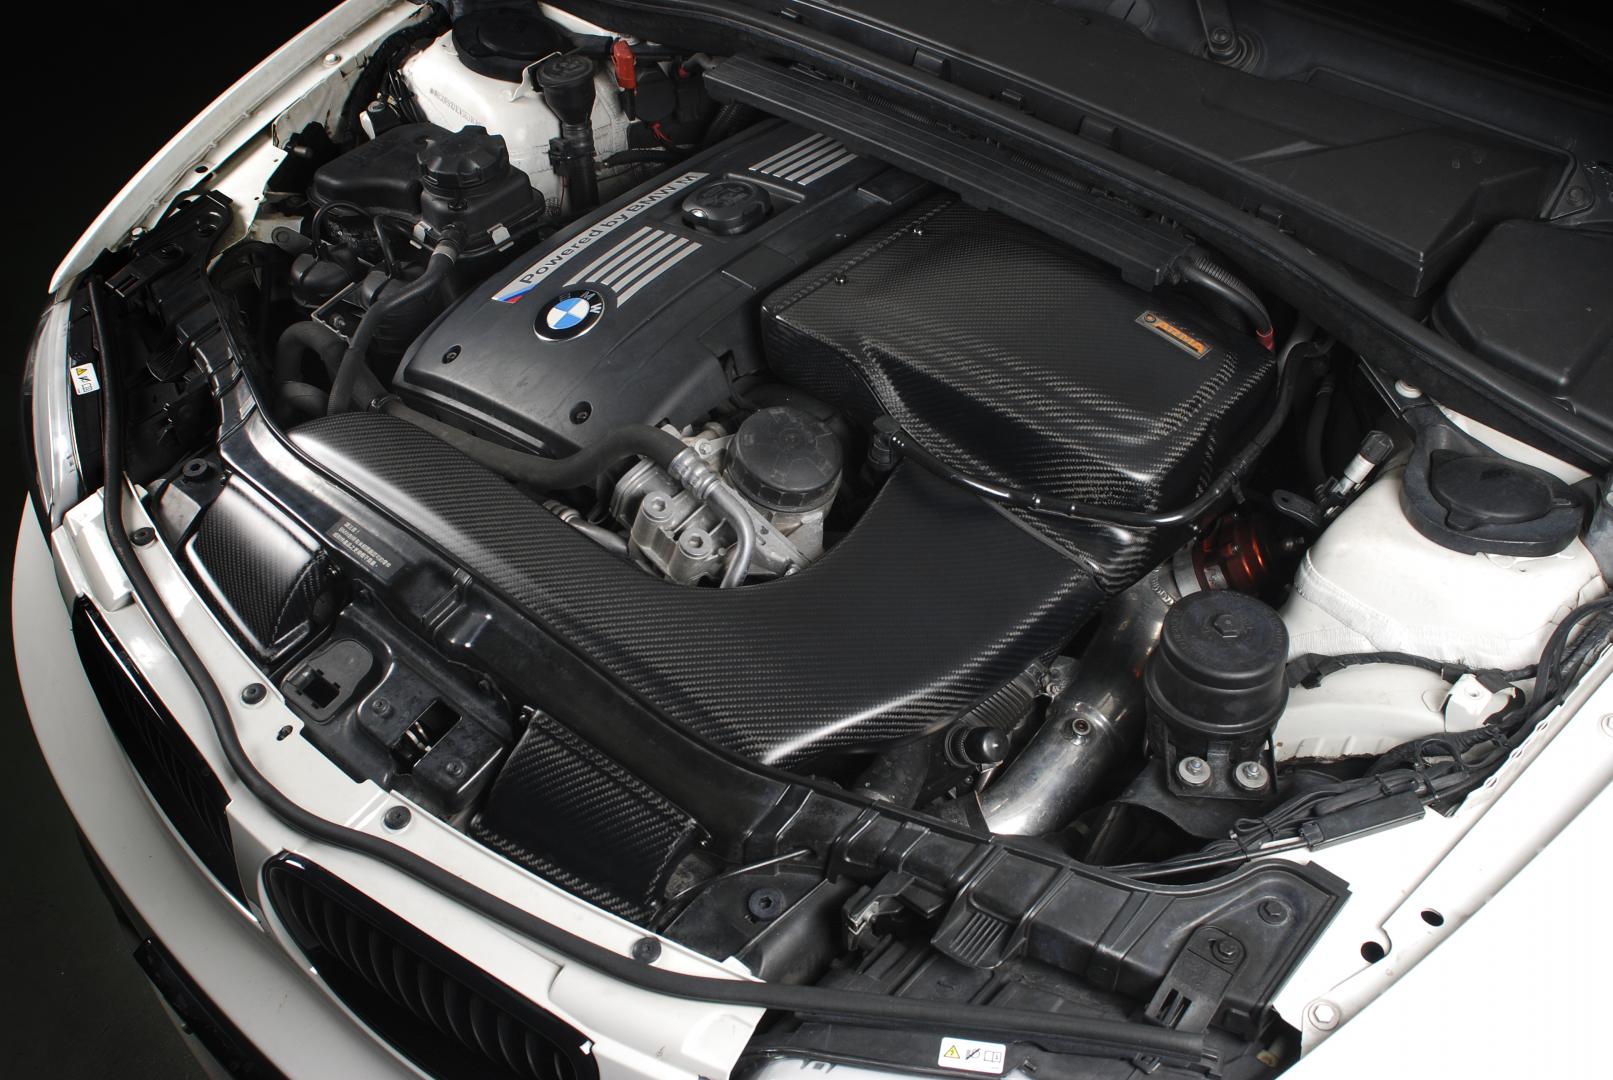 Armaspeed Carbon Fibre Air Intake suit BMW 135i 1M E82 E88 - MODE Auto Concepts